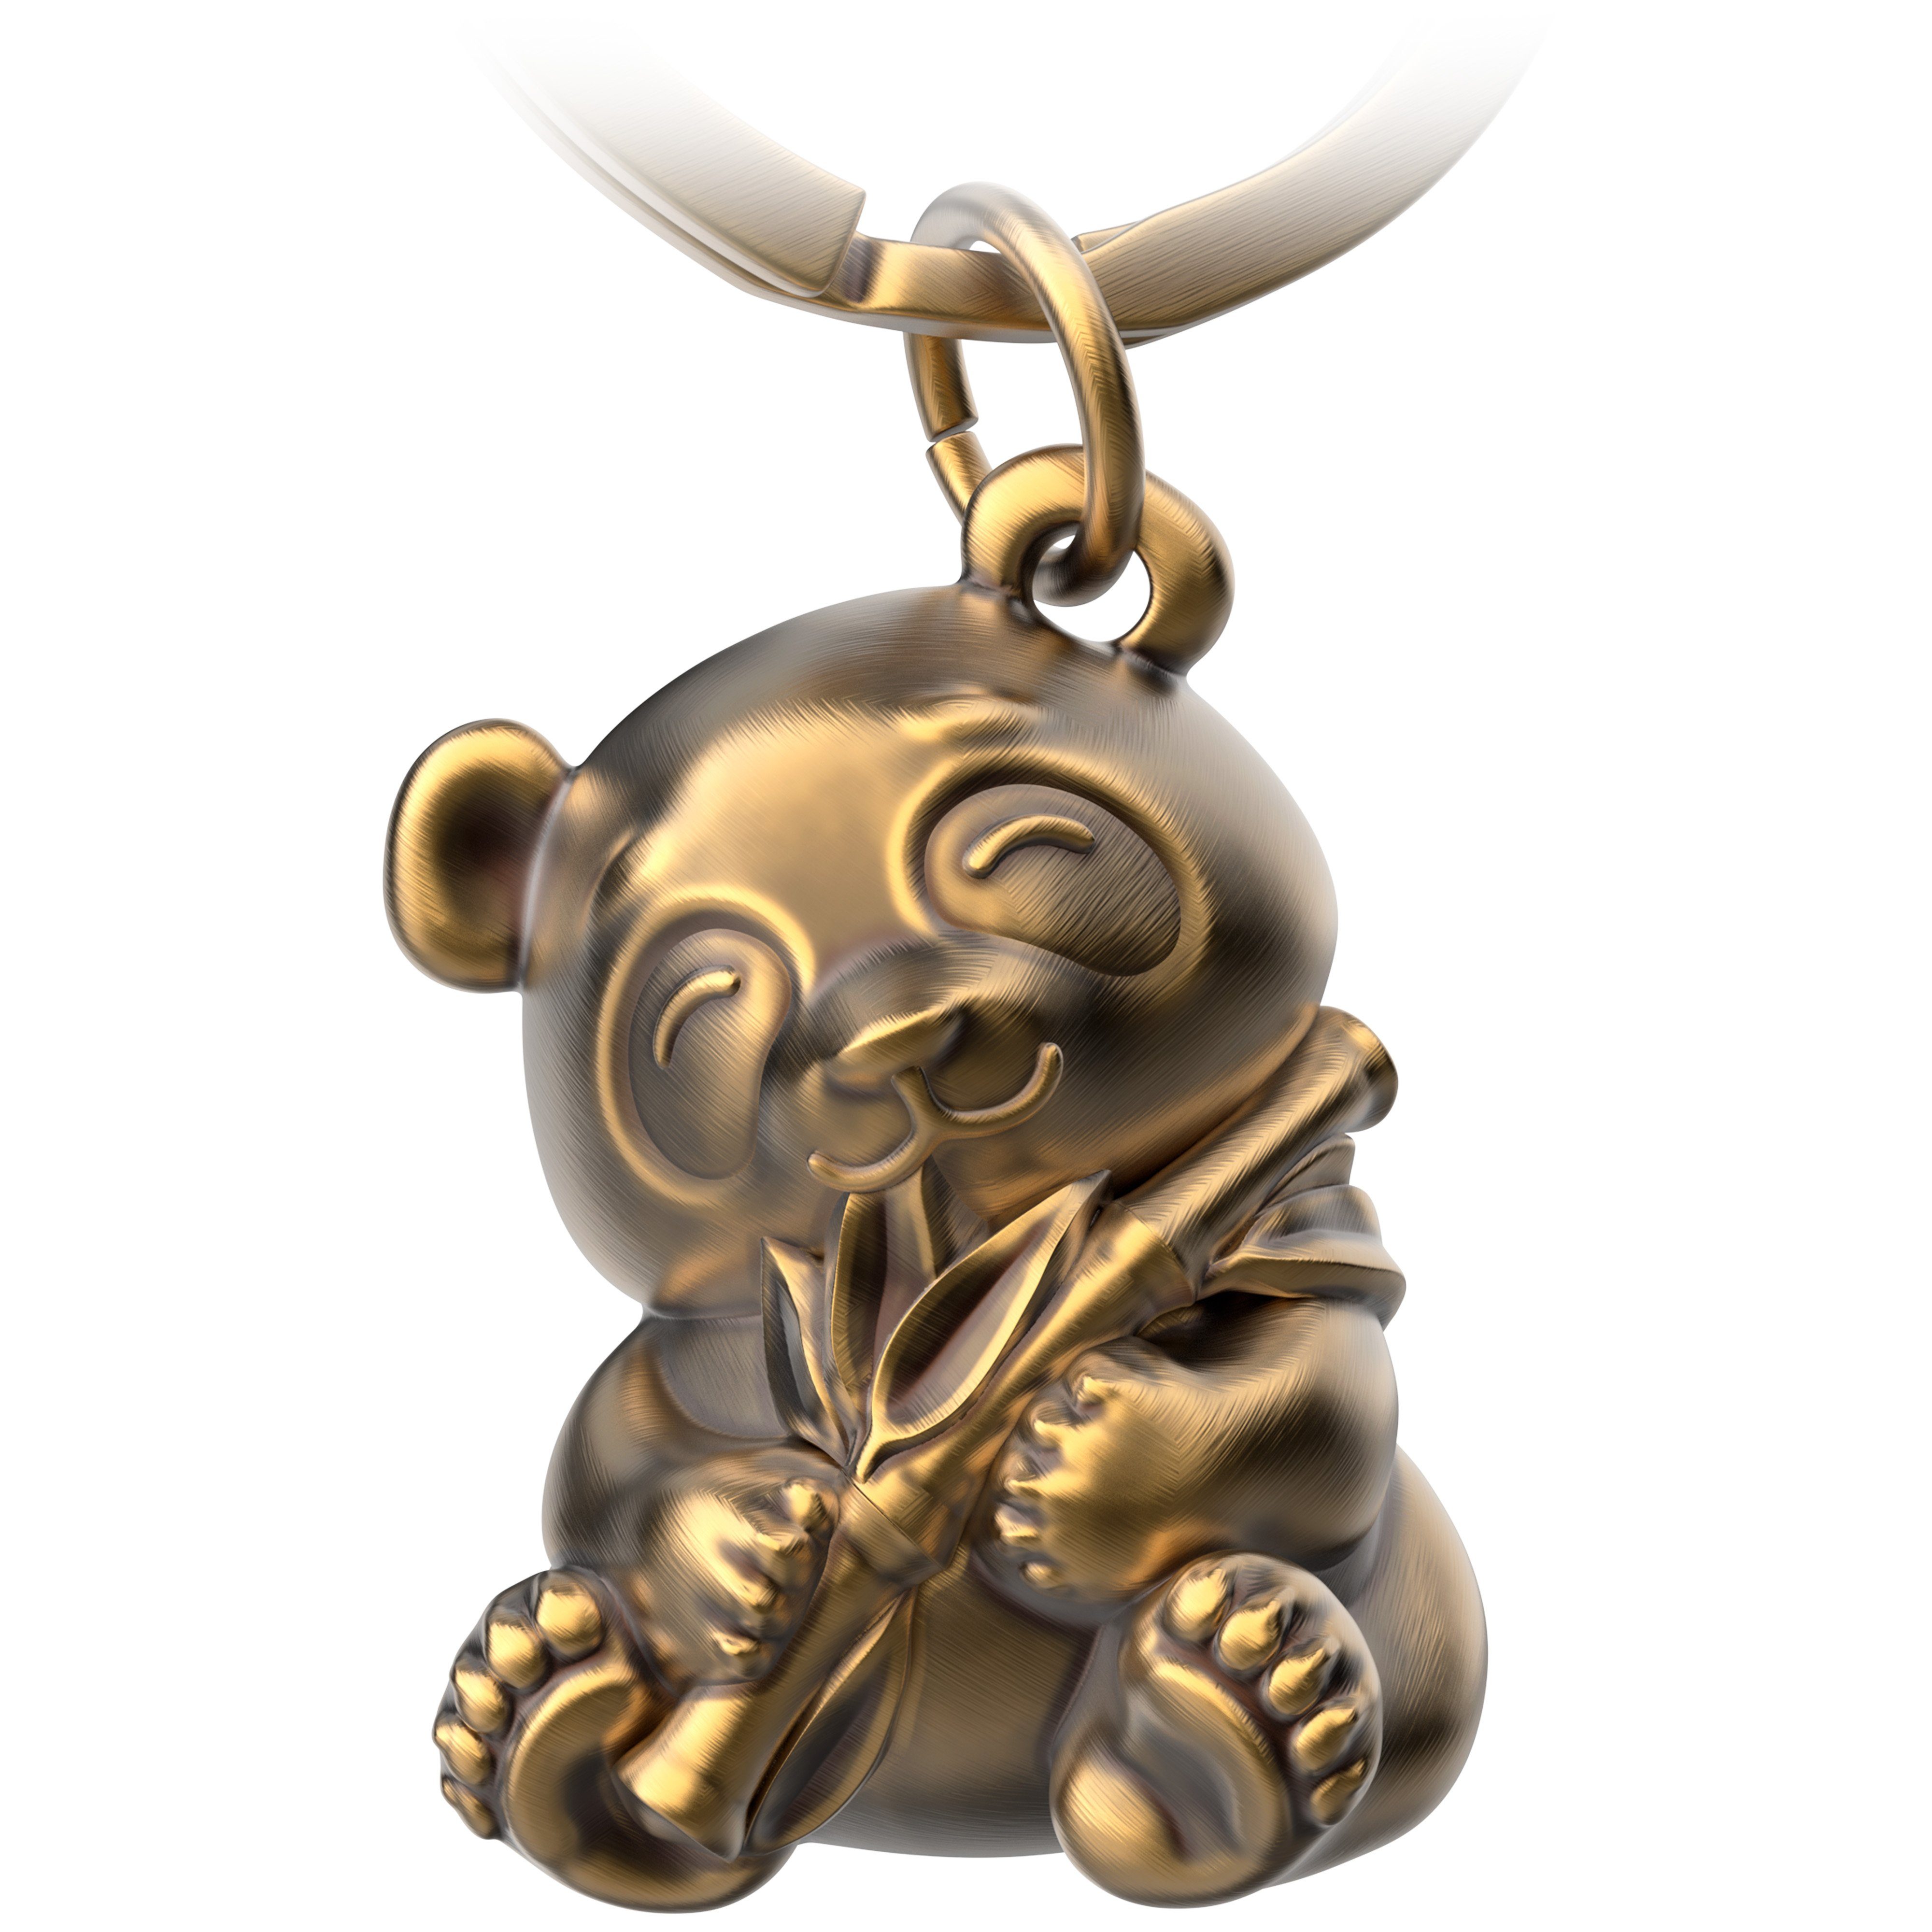 FABACH Schlüsselanhänger Panda "Tao" Geschenk - Bär für Liebhaber Bär Glücksbringer Antique Bronze Panda